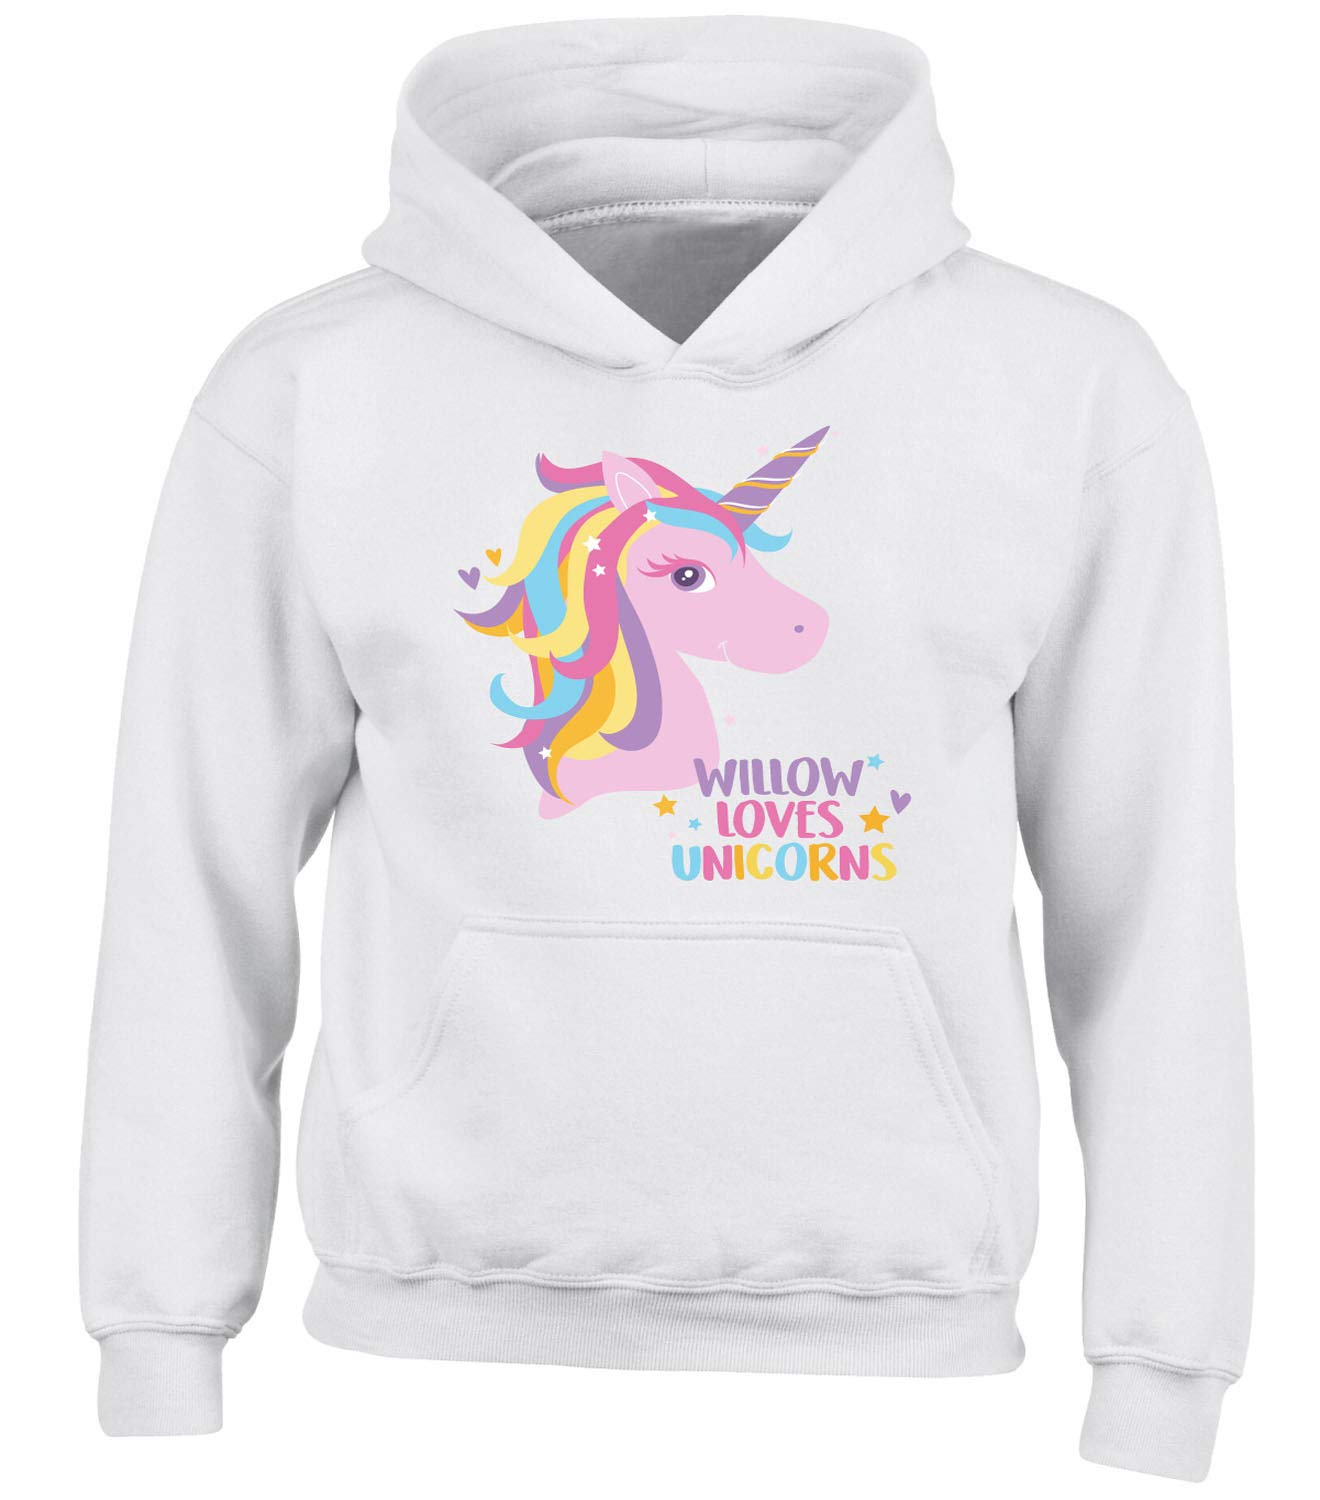 Unicorn Jumpers - Cute Personalised Unicorns Fun Hoodie Girls Boys Sweatshirt Gift